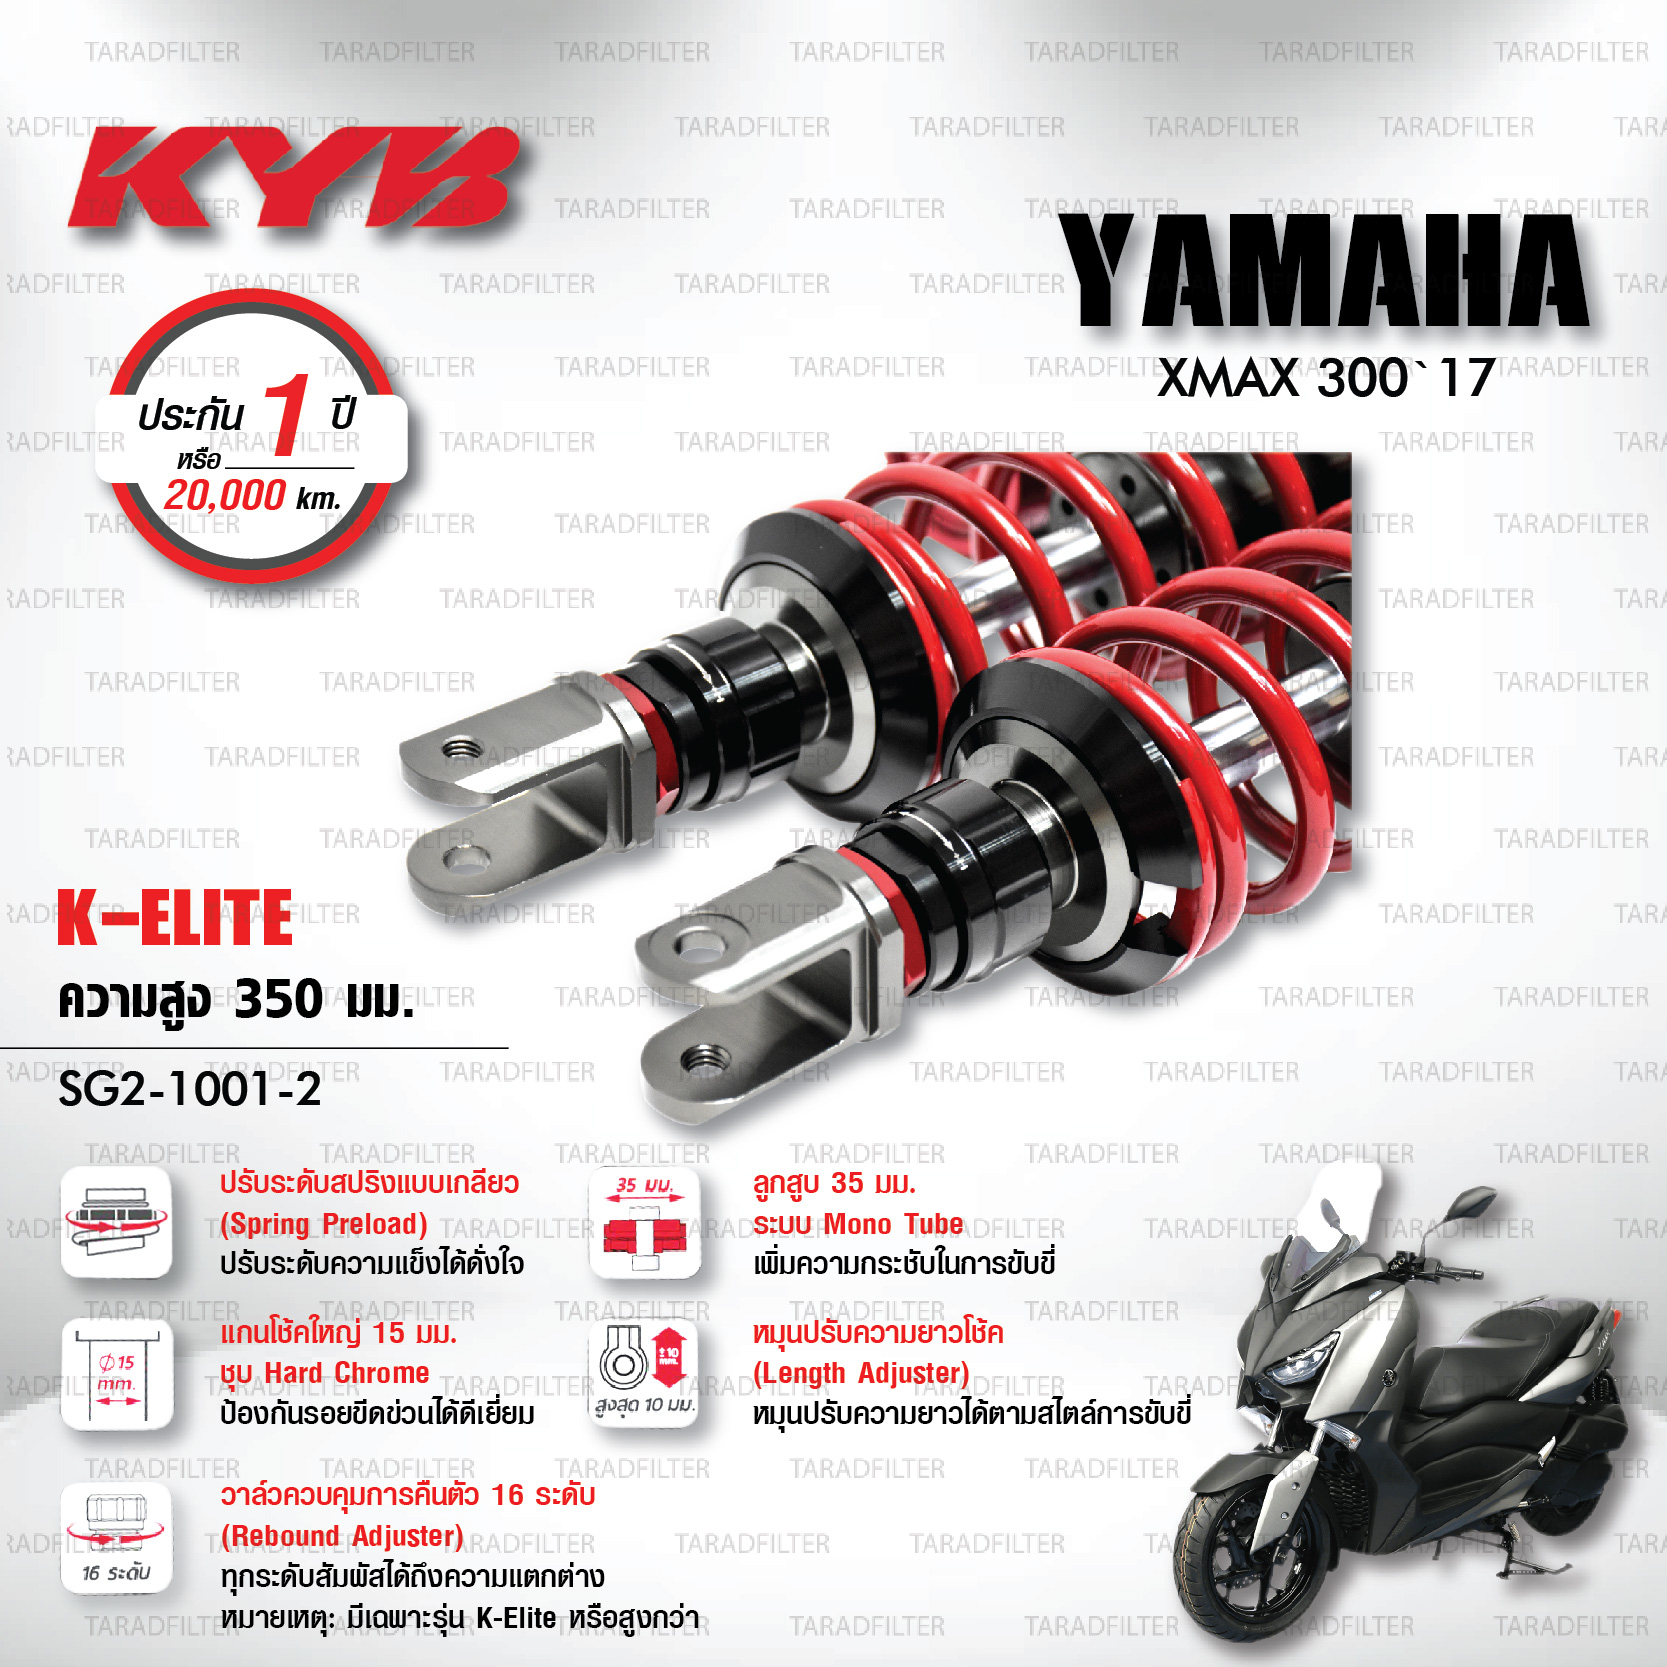 KYB โช๊คแก๊ส รุ่น K-Elite อัพเกรด Yamaha XMAX 300 '17 【 SG2-1001-2 】โช๊คคู่หลัง/สปริงแดง (ปรับความสูงและปรับสปริงได้) [ โช๊ค KYB แท้ ประกันโรงงาน 1 ปี ]